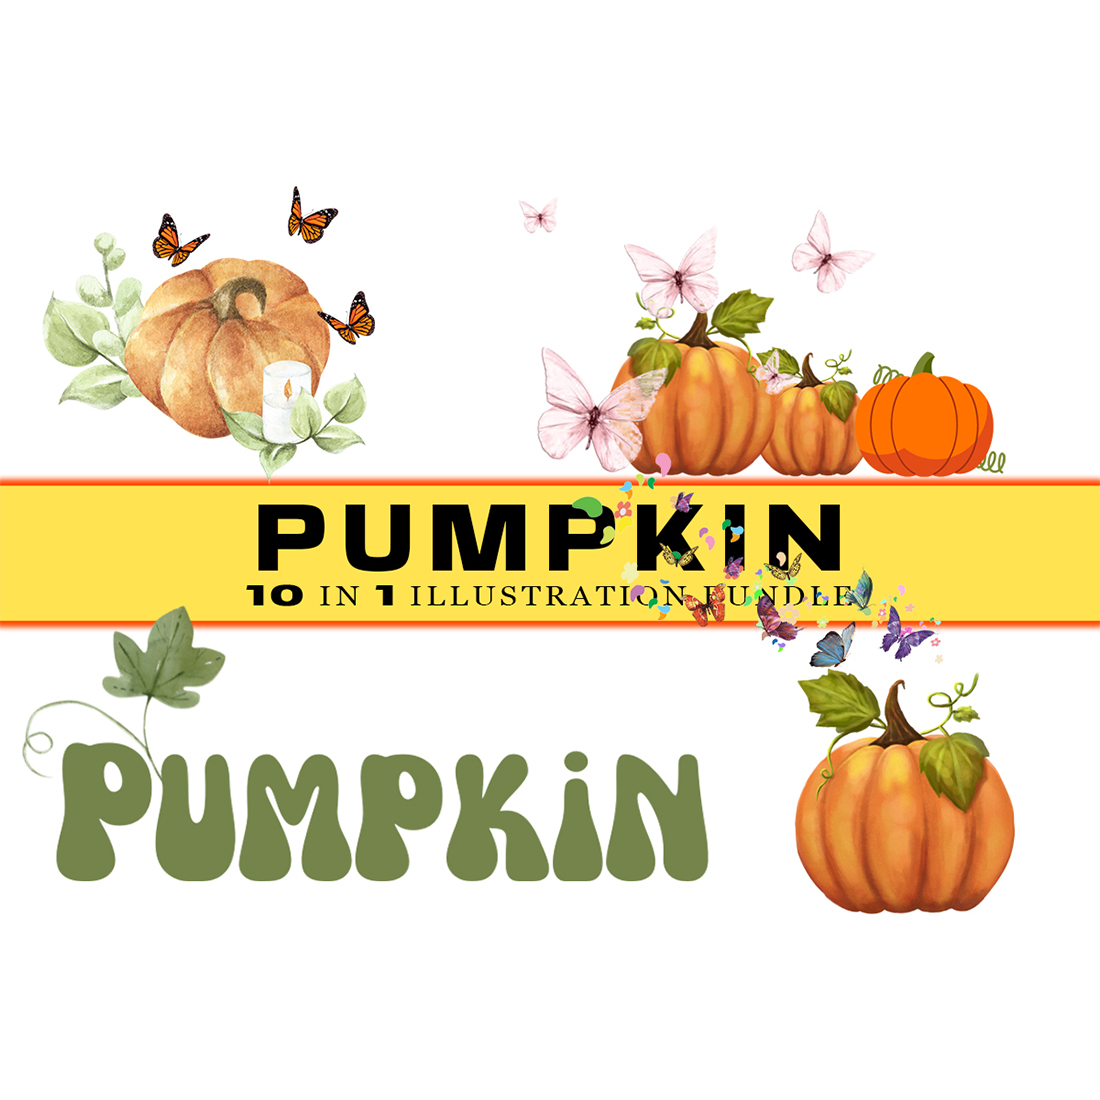 Set of adorable pumpkin images